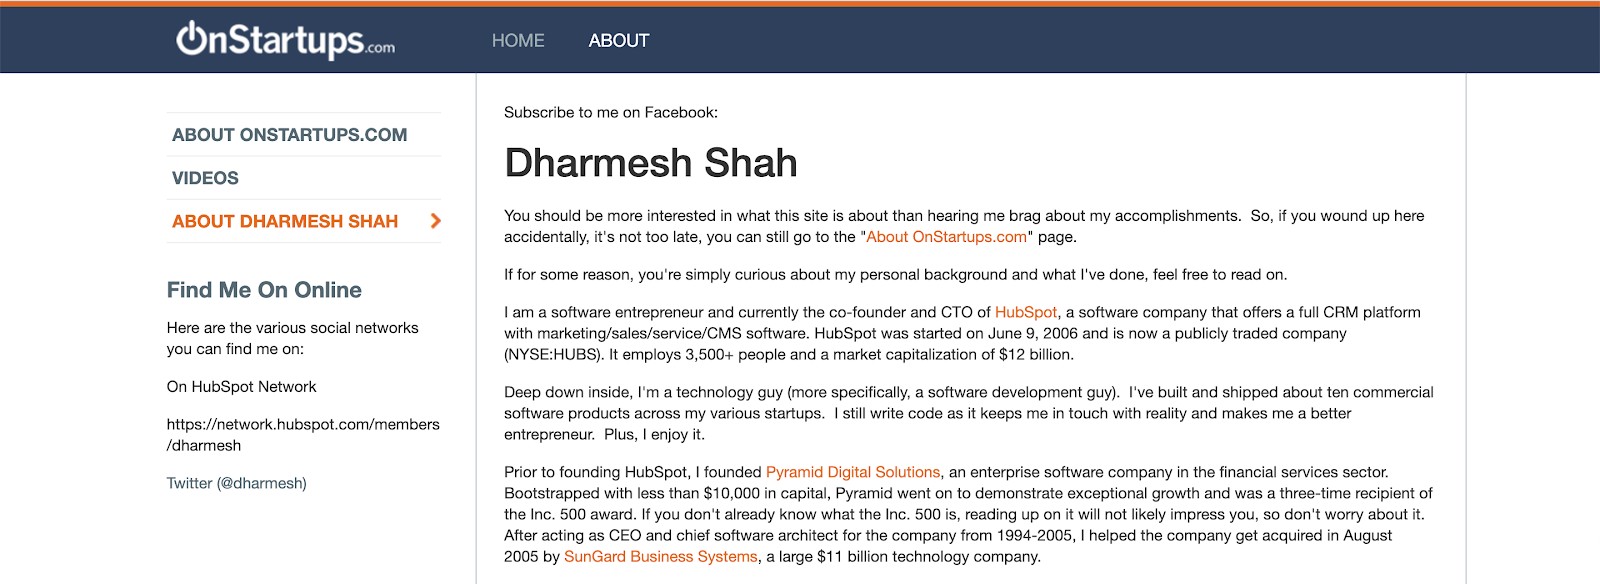 dharmesh's onstartups bio